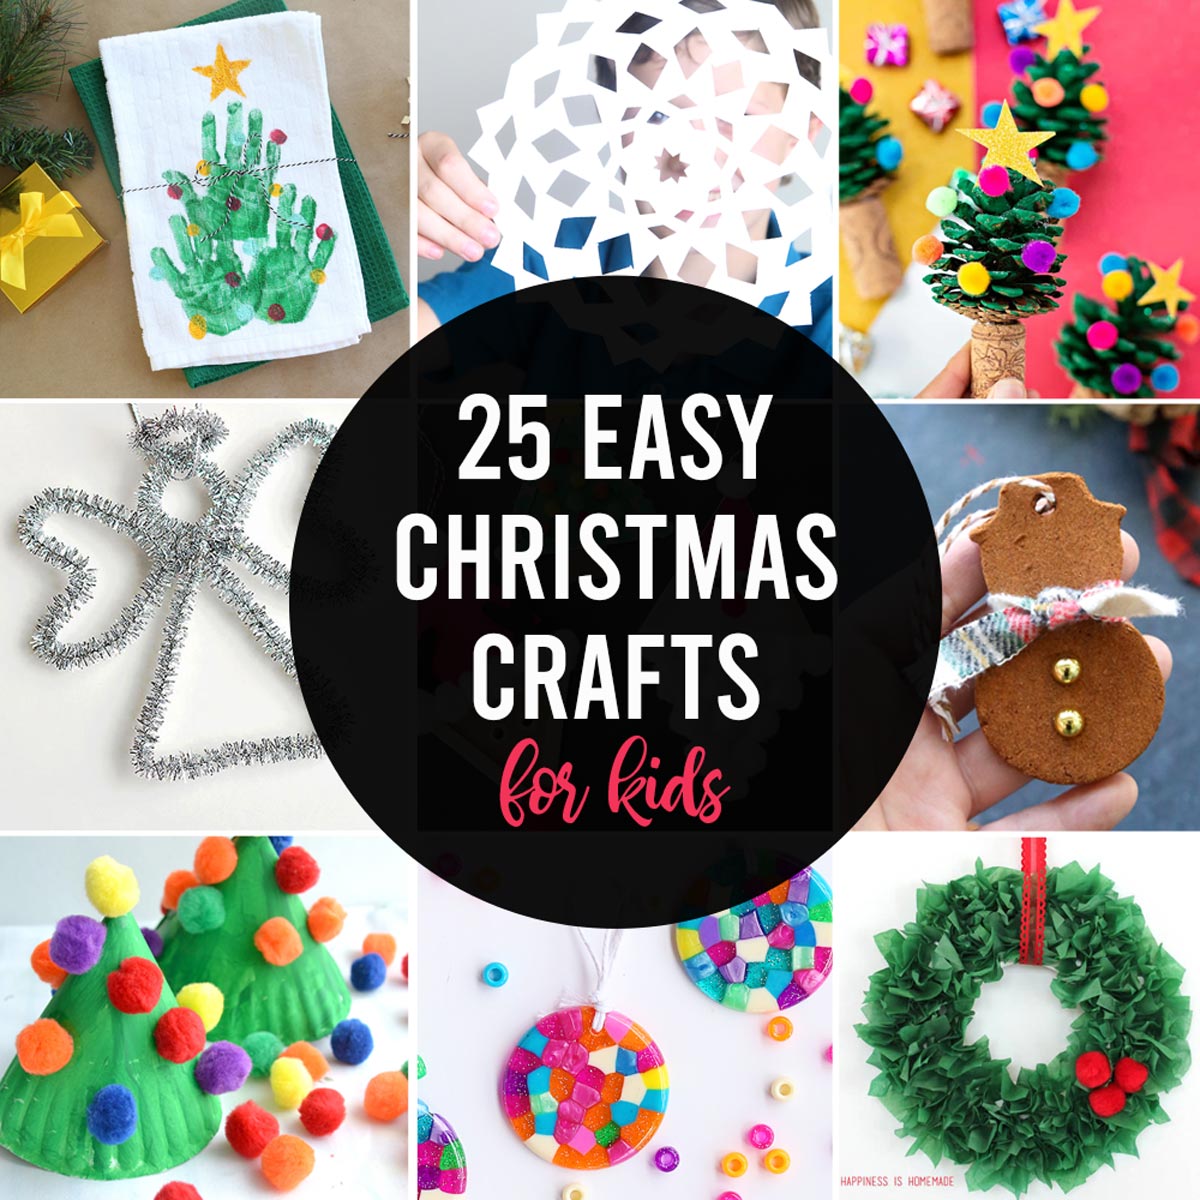 DIY Christmas Crafts for Kids to Make